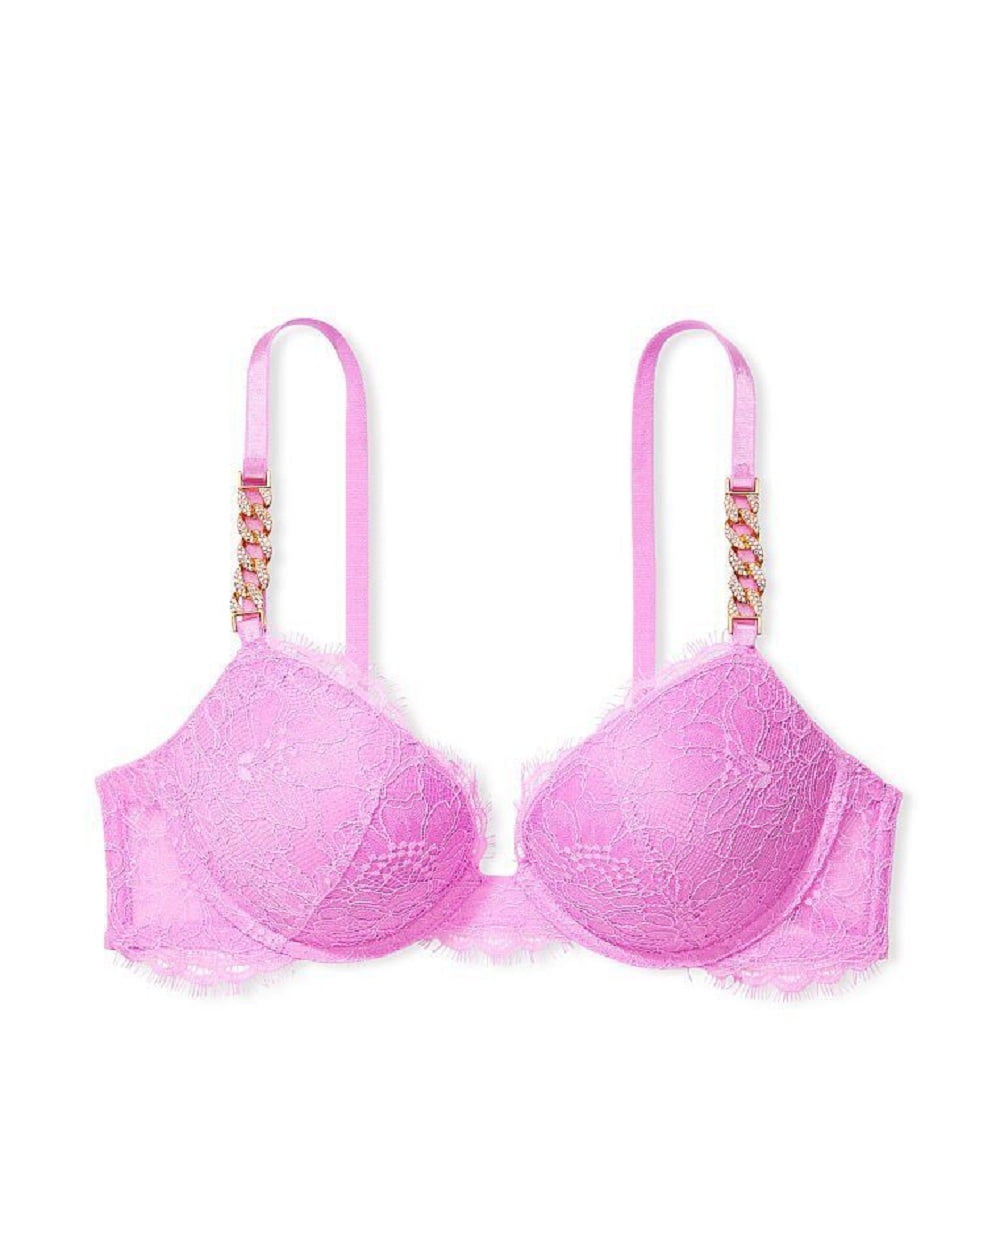 Victoria's Secret Very Sexy Push-up Bra Rhinestone Chain Strap Pink Cup  Size 38DD NWT